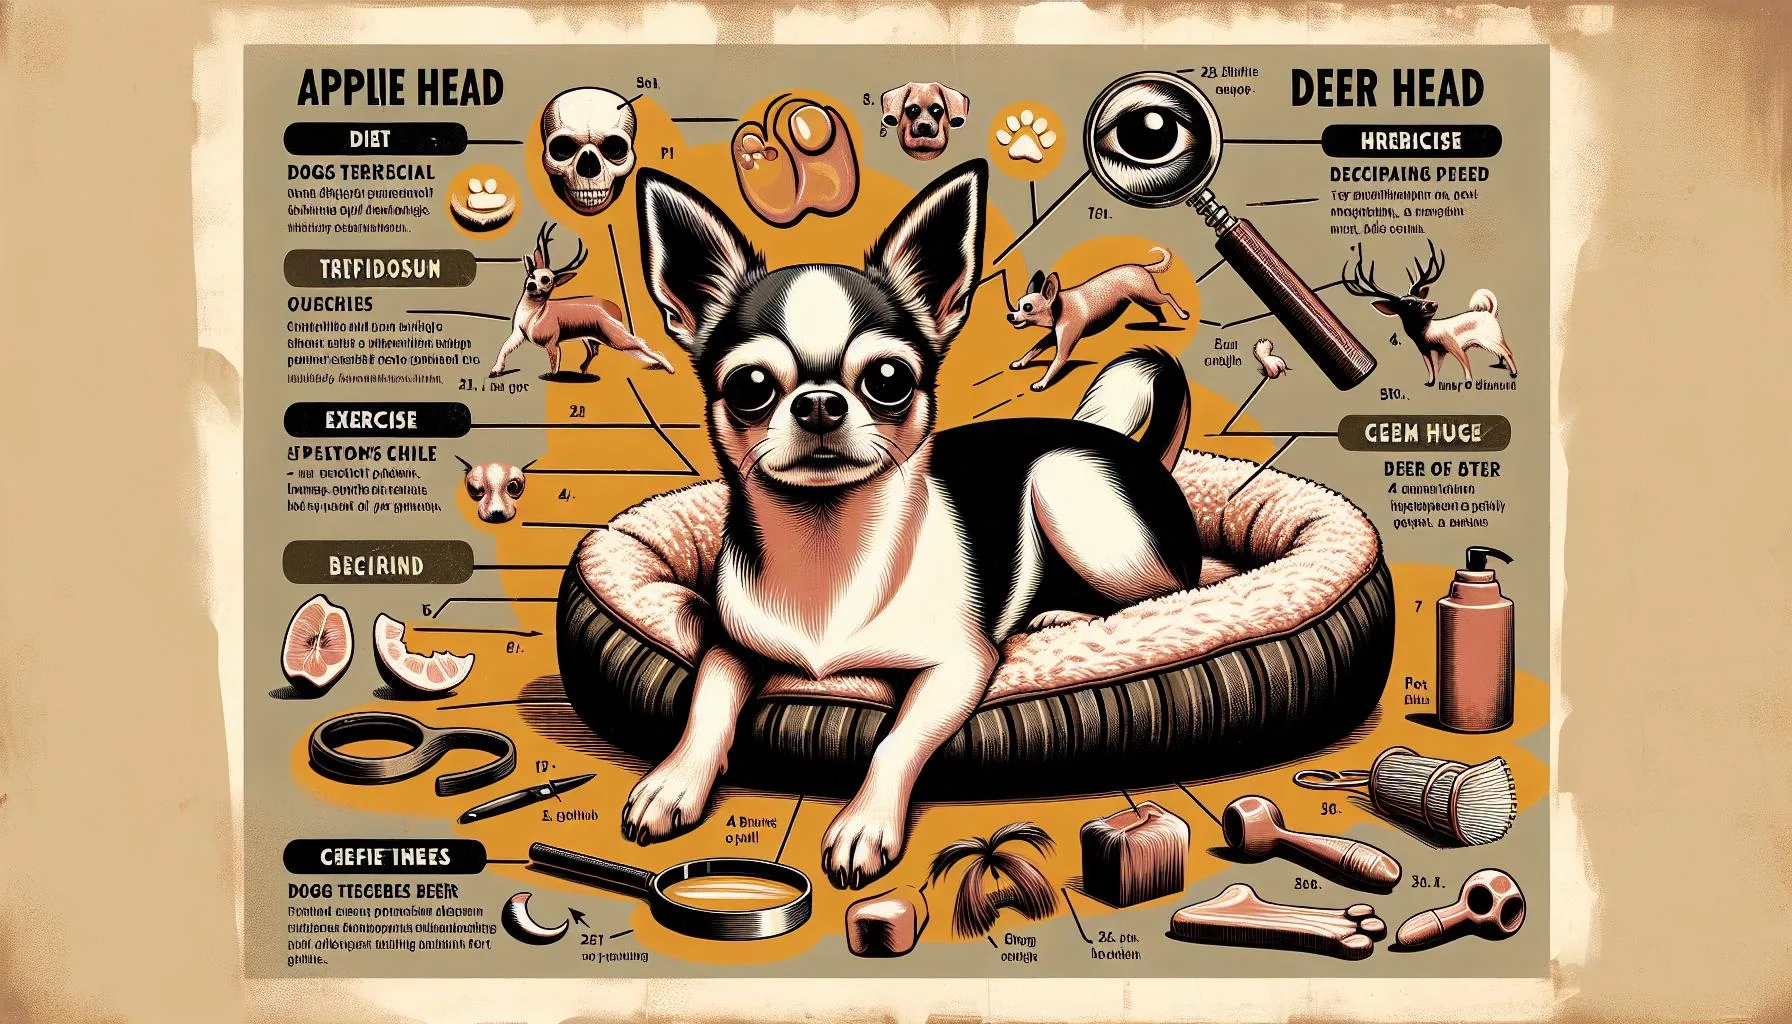 Applehead vs Deer Head Chihuahua: Choose Your Favorite!